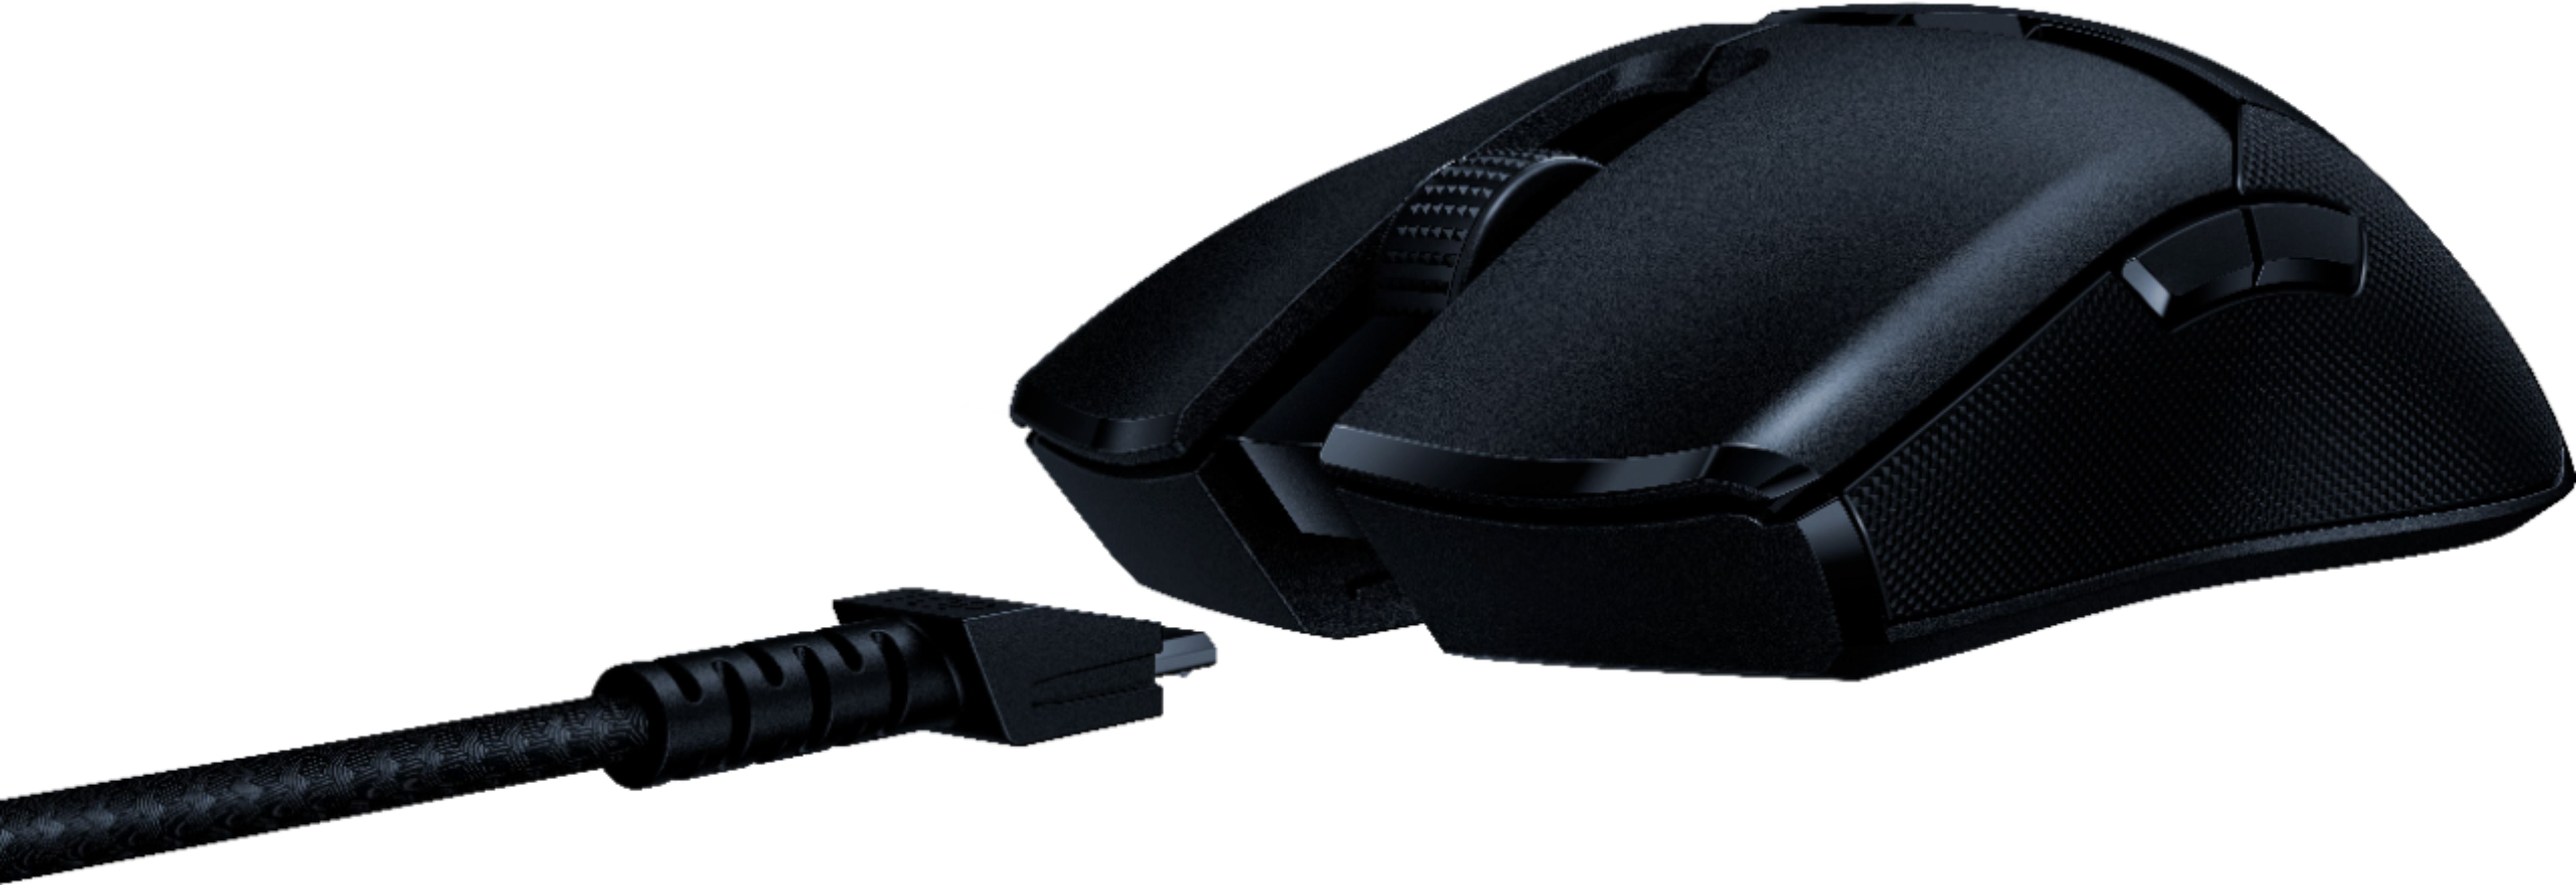 Razer Viper Ultimate Wireless Optical Gaming Mouse - Black